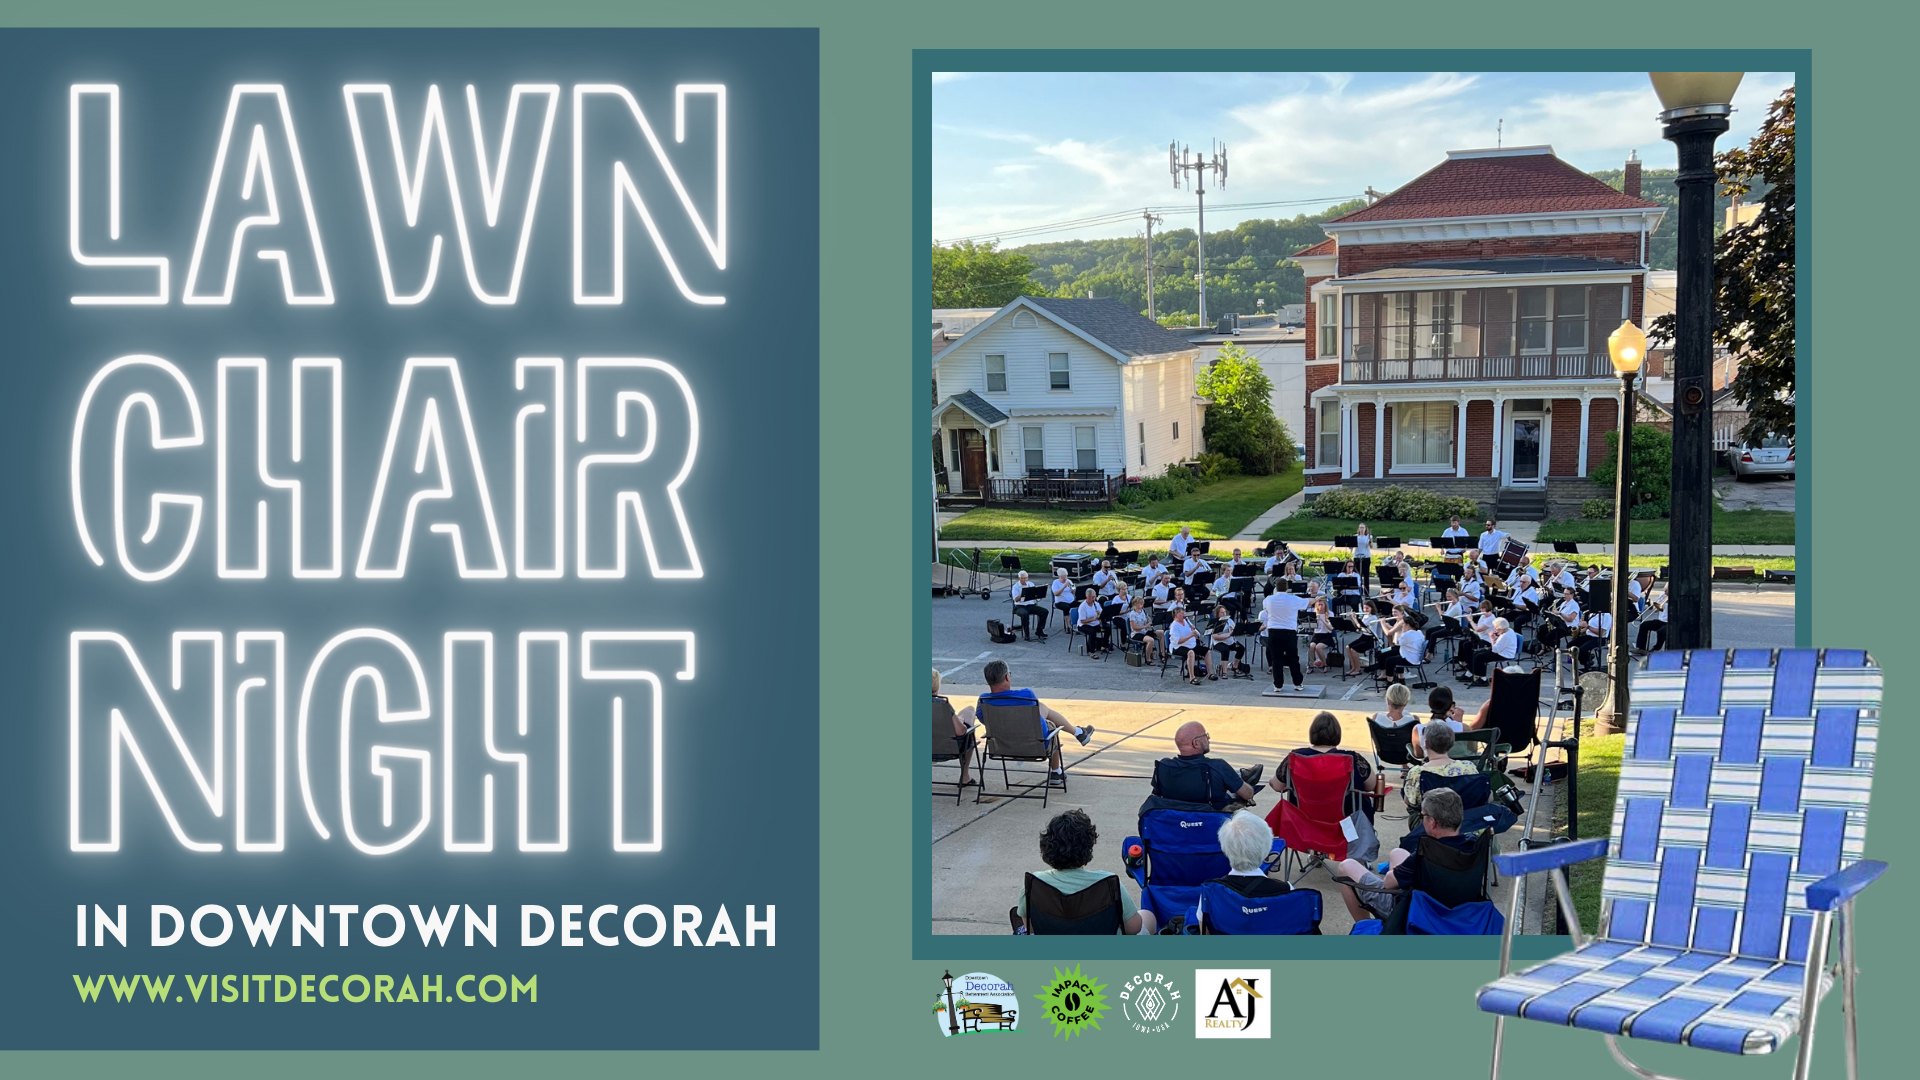 Lawn Chair Night in Downtown Decorah: Decorah Municipal Band thumbnail